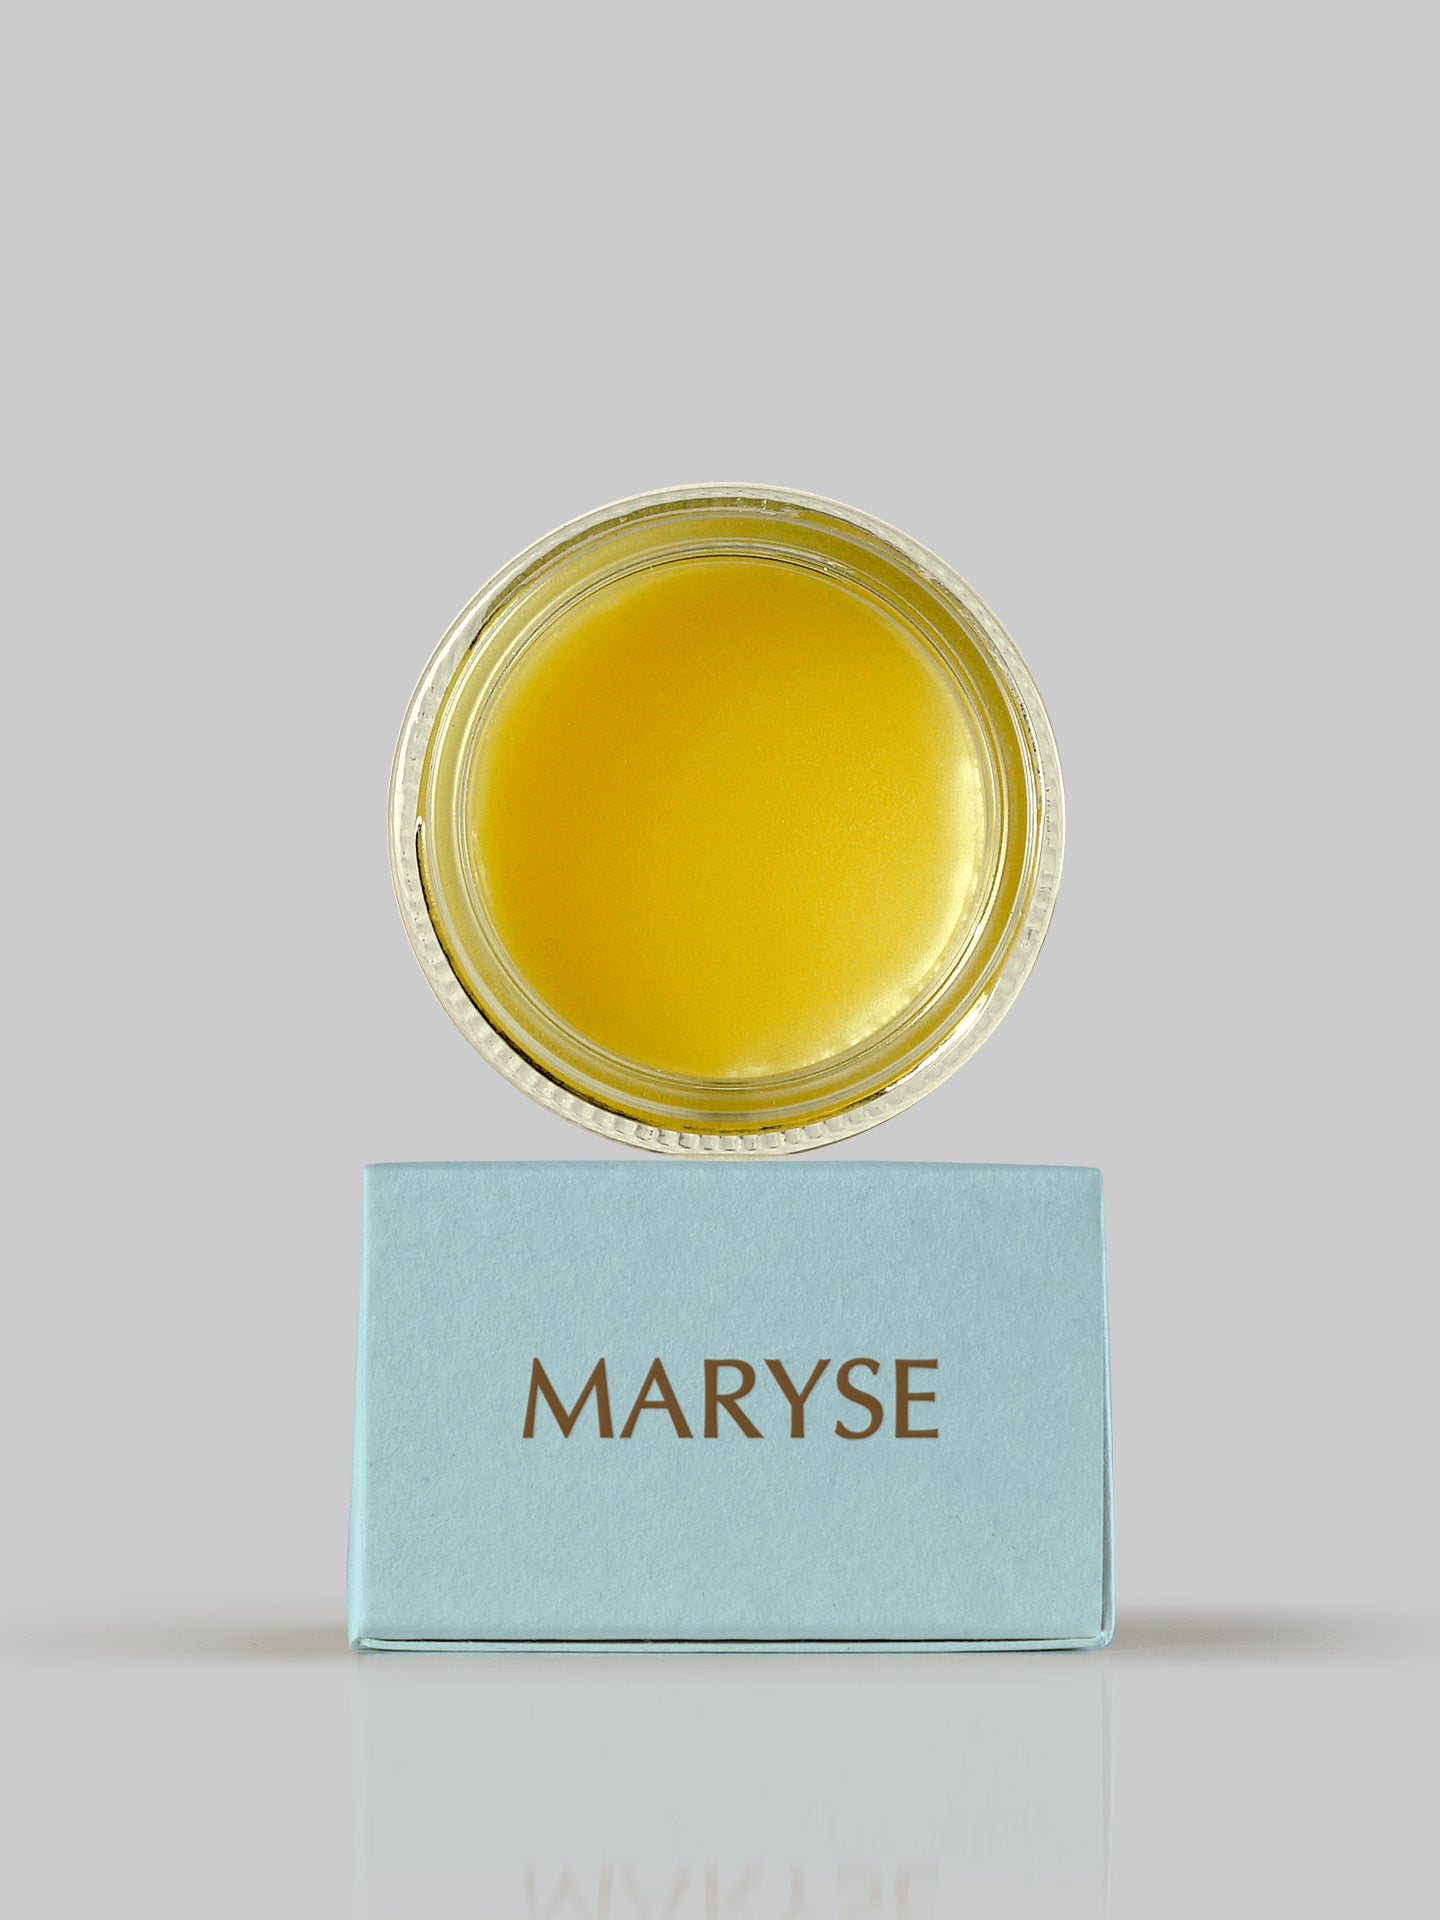 MARYSE Treatment – Balm in a blue box.